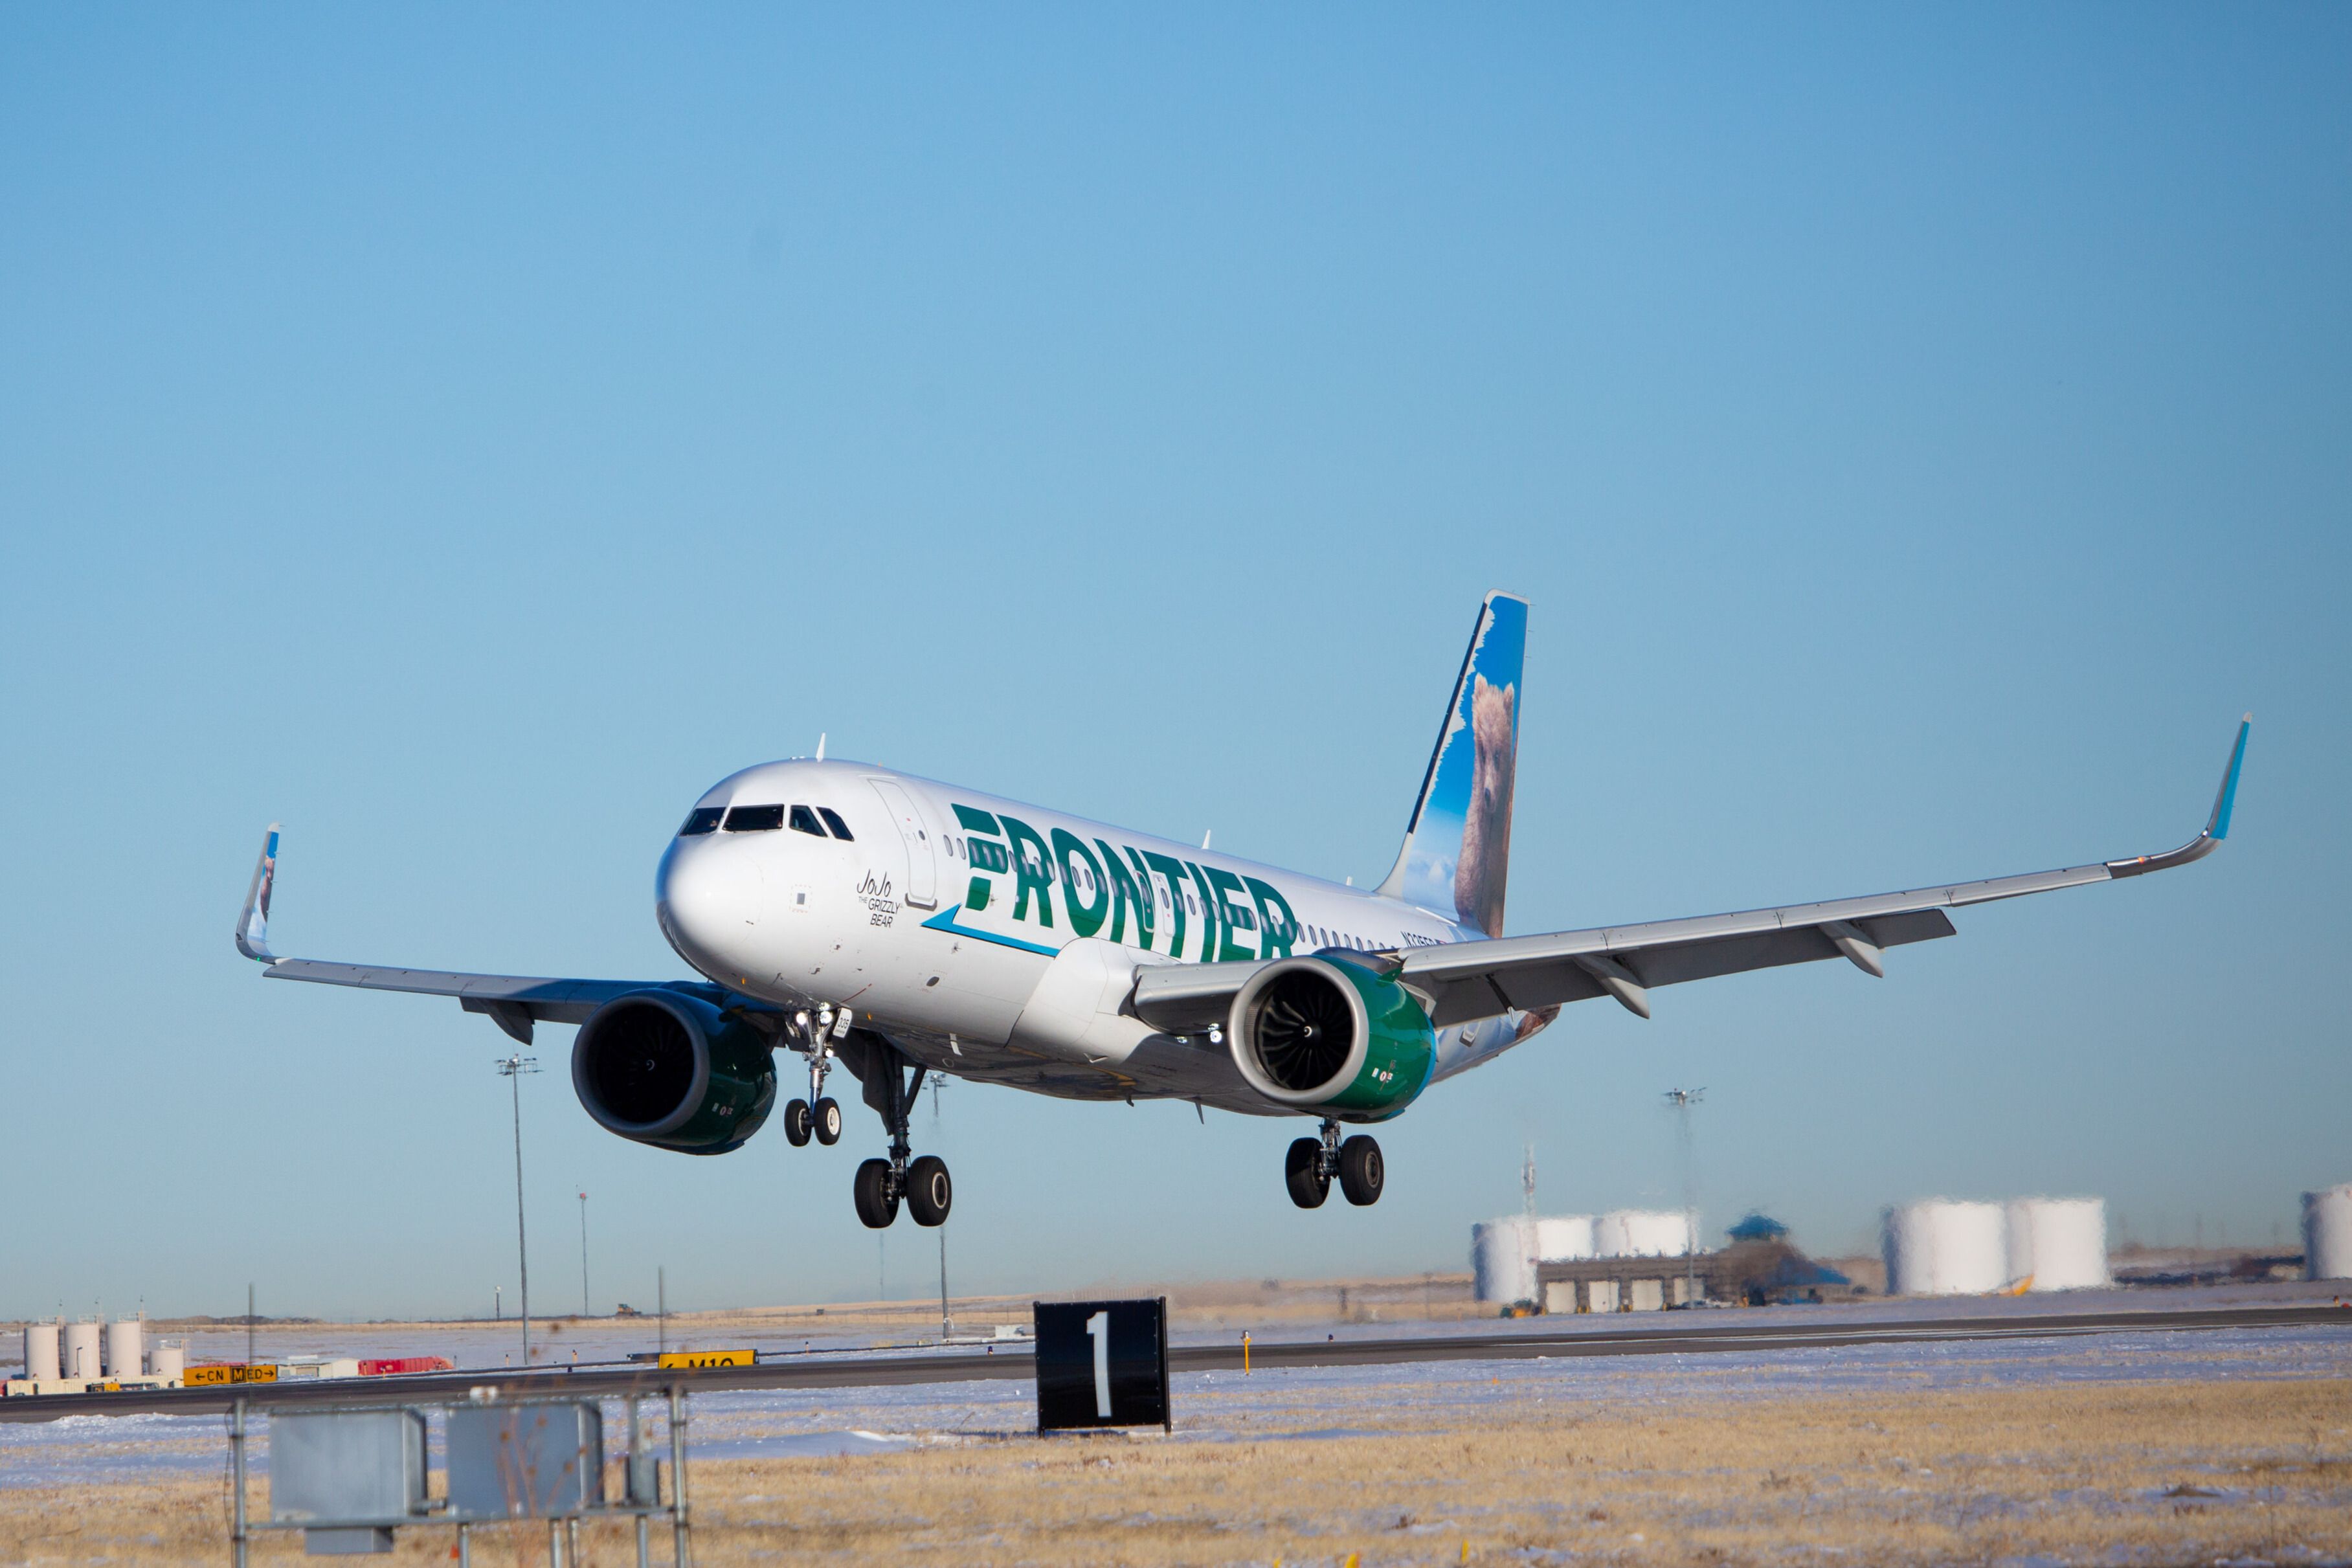 A Frontier Airlines plane landing in Denver